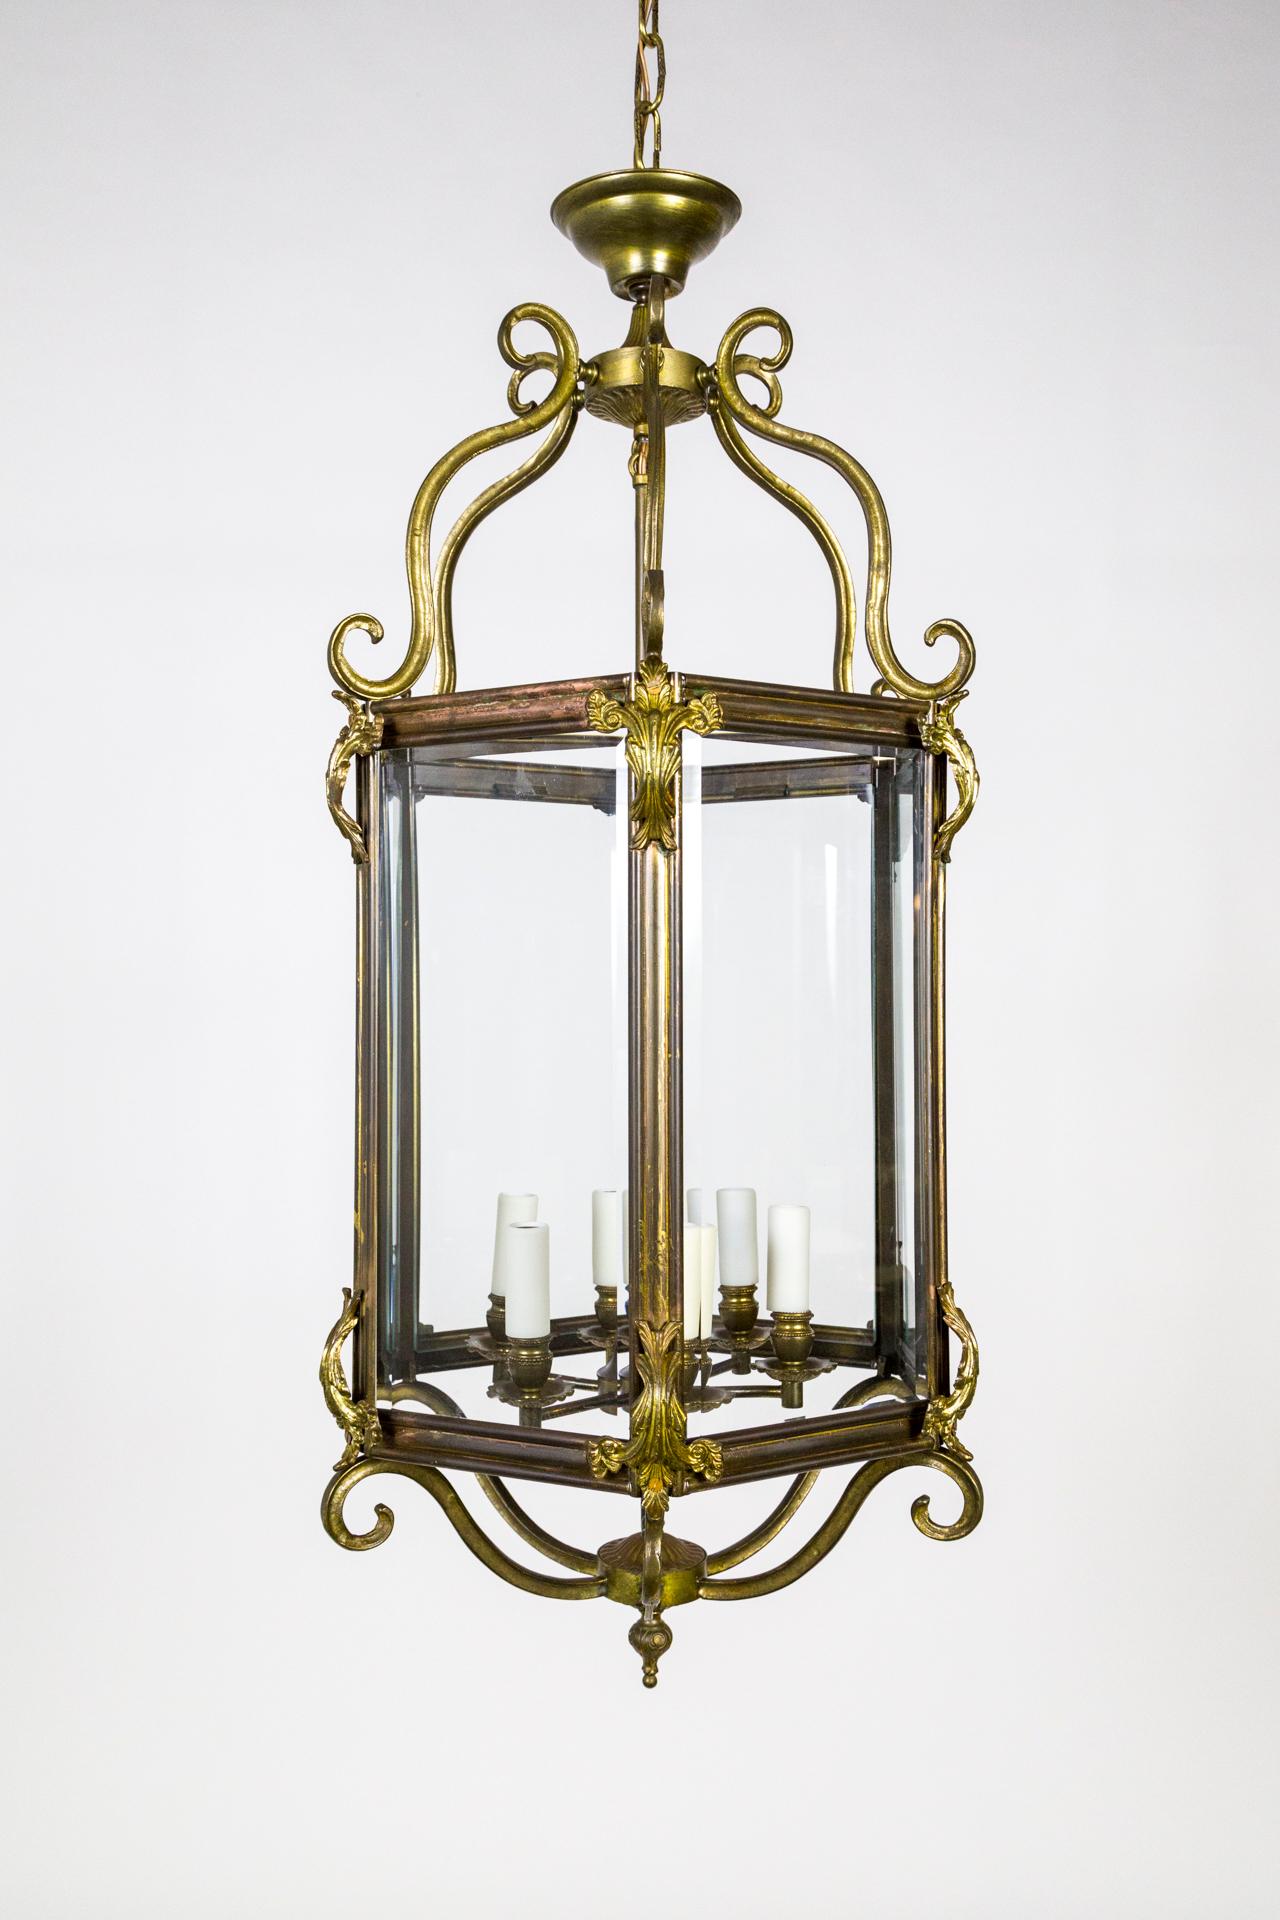 Large Regency 6 Panel Brass Lantern w/ Scrolls Acanthus Leaves For Sale 5